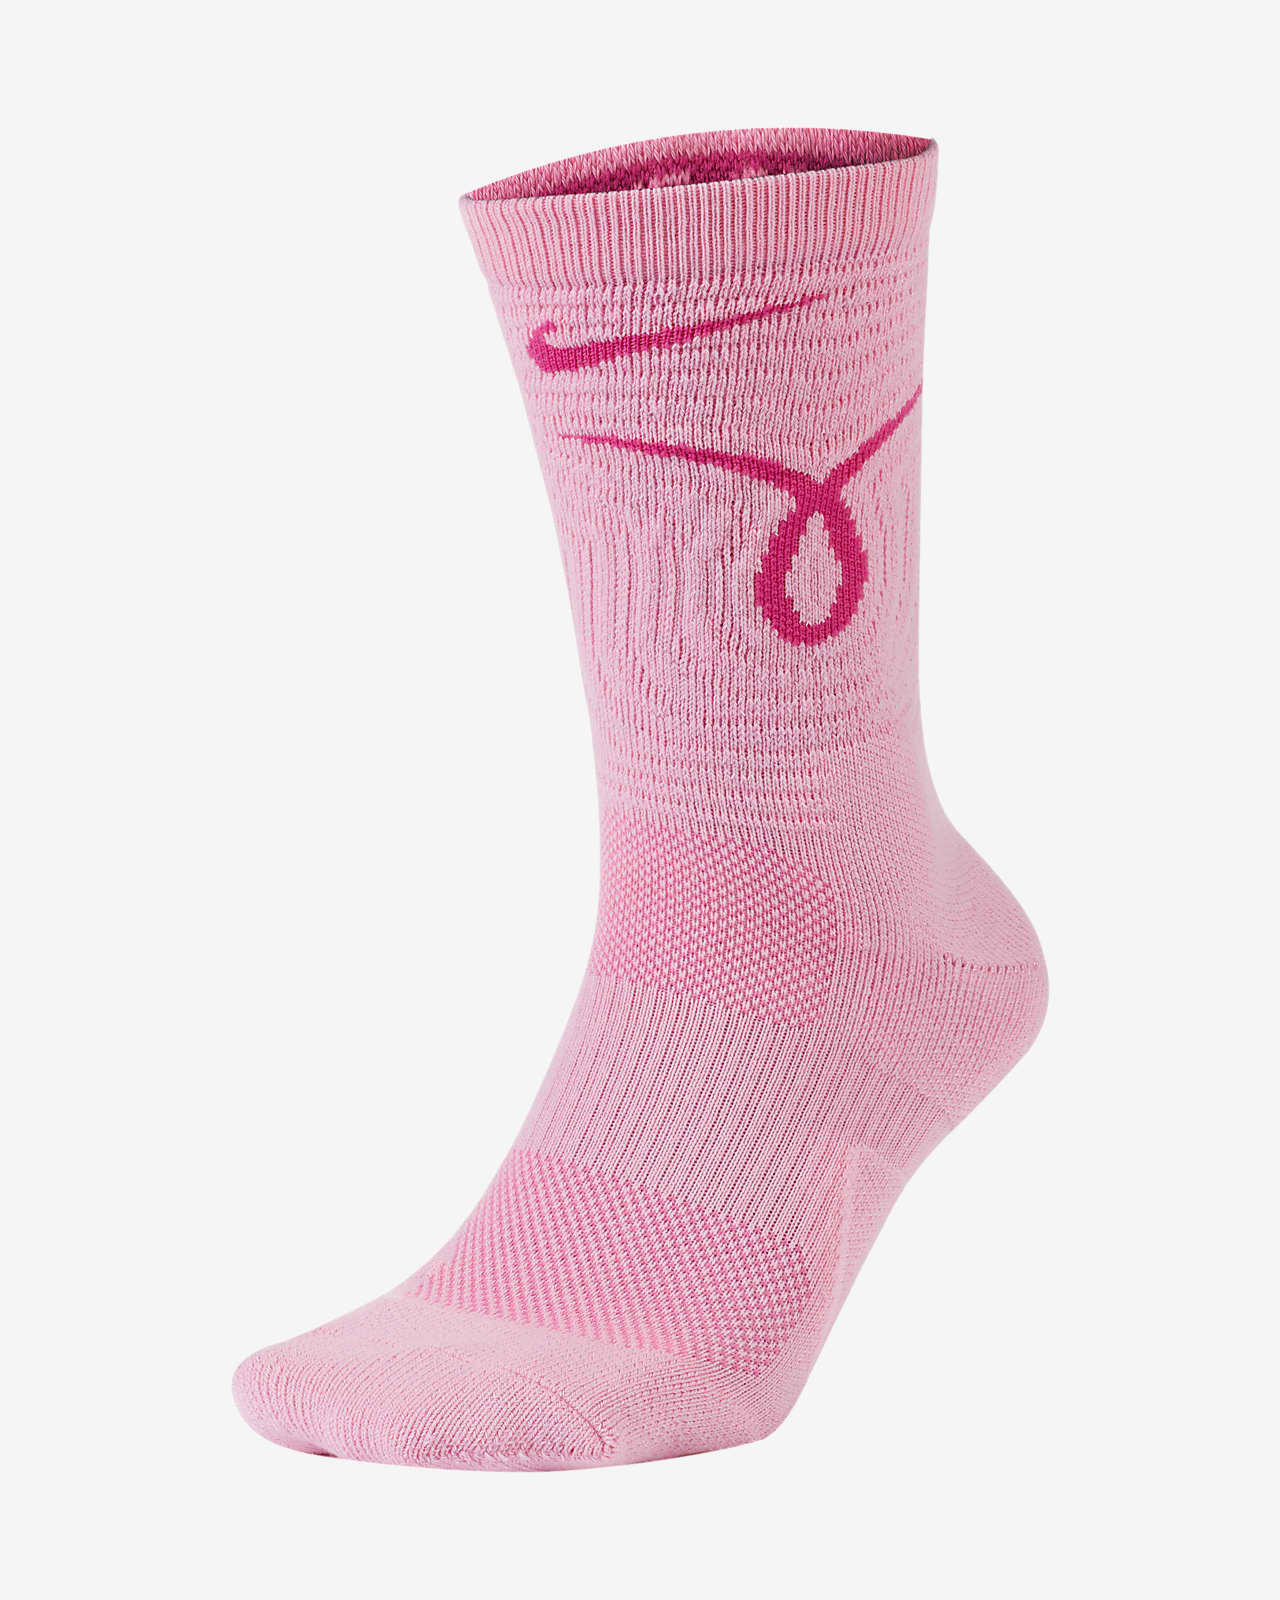 Nike Elite Crew Basketball Socks Pink LARGE (MEN 8-12) Breast Cancer 4513-  611